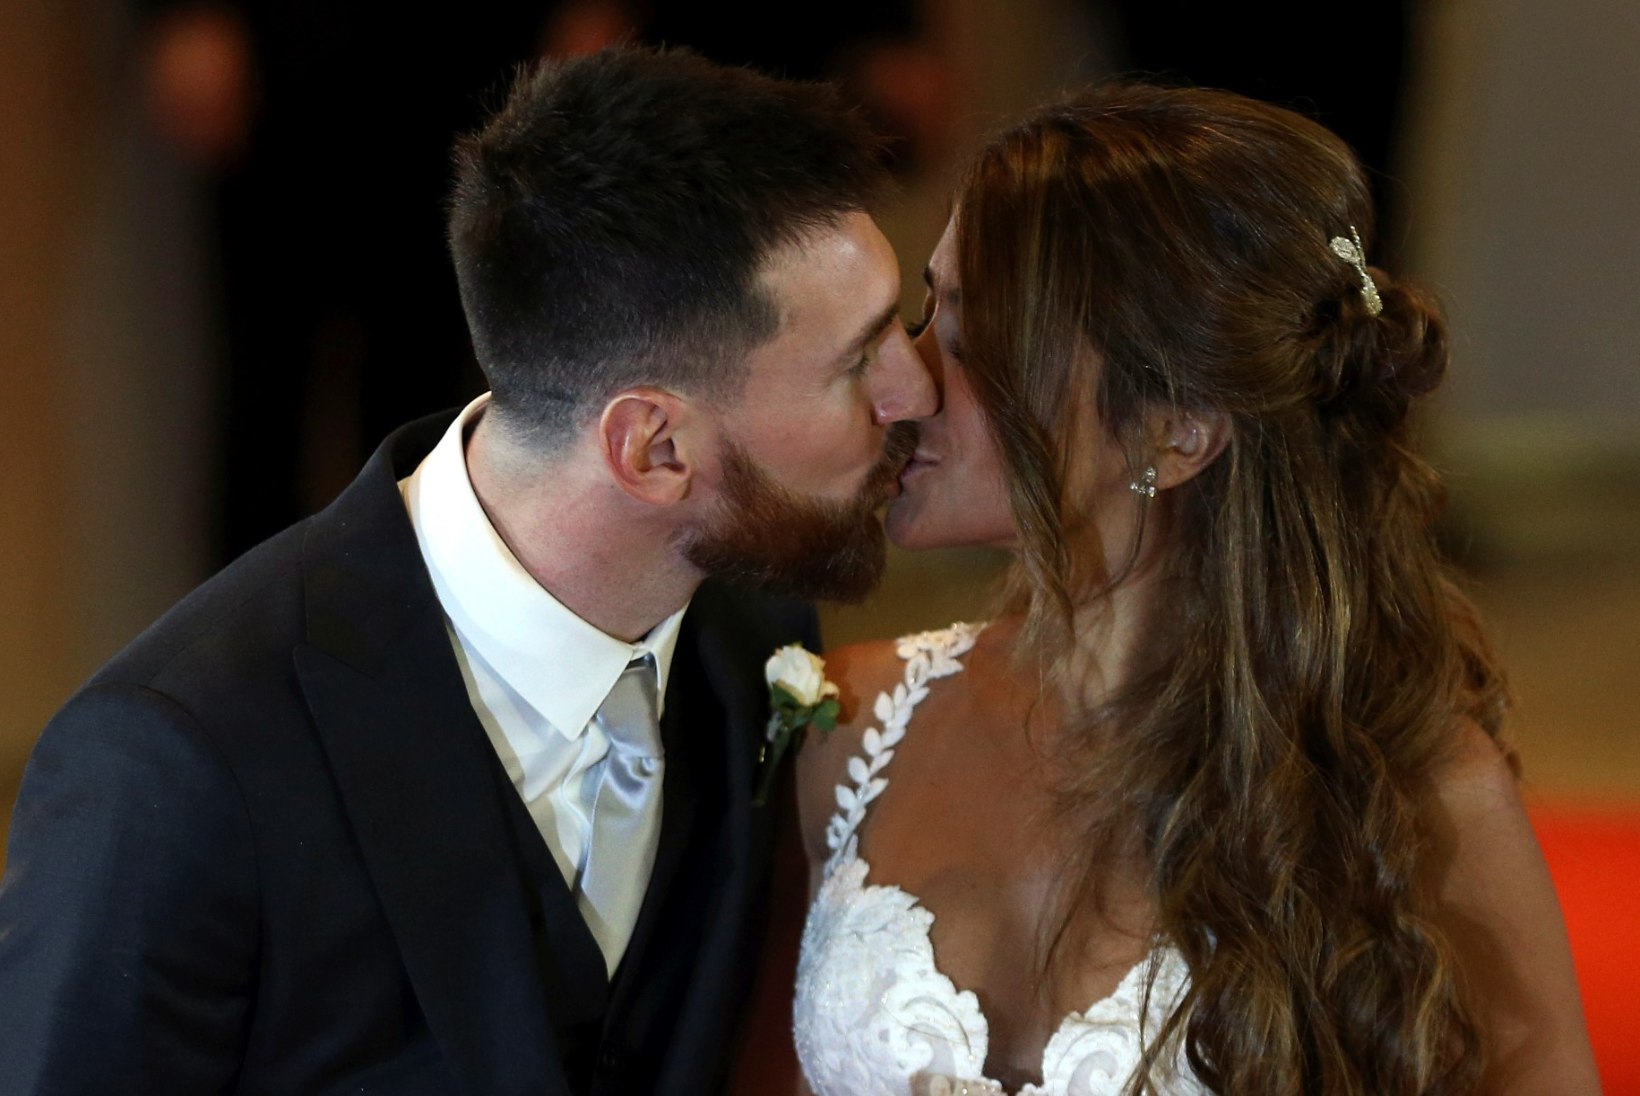 KIBE! FOTOD! Vutitäht Lionel Messi abiellus oma lapsepõlvekallima Antonella Roccuzzoga!